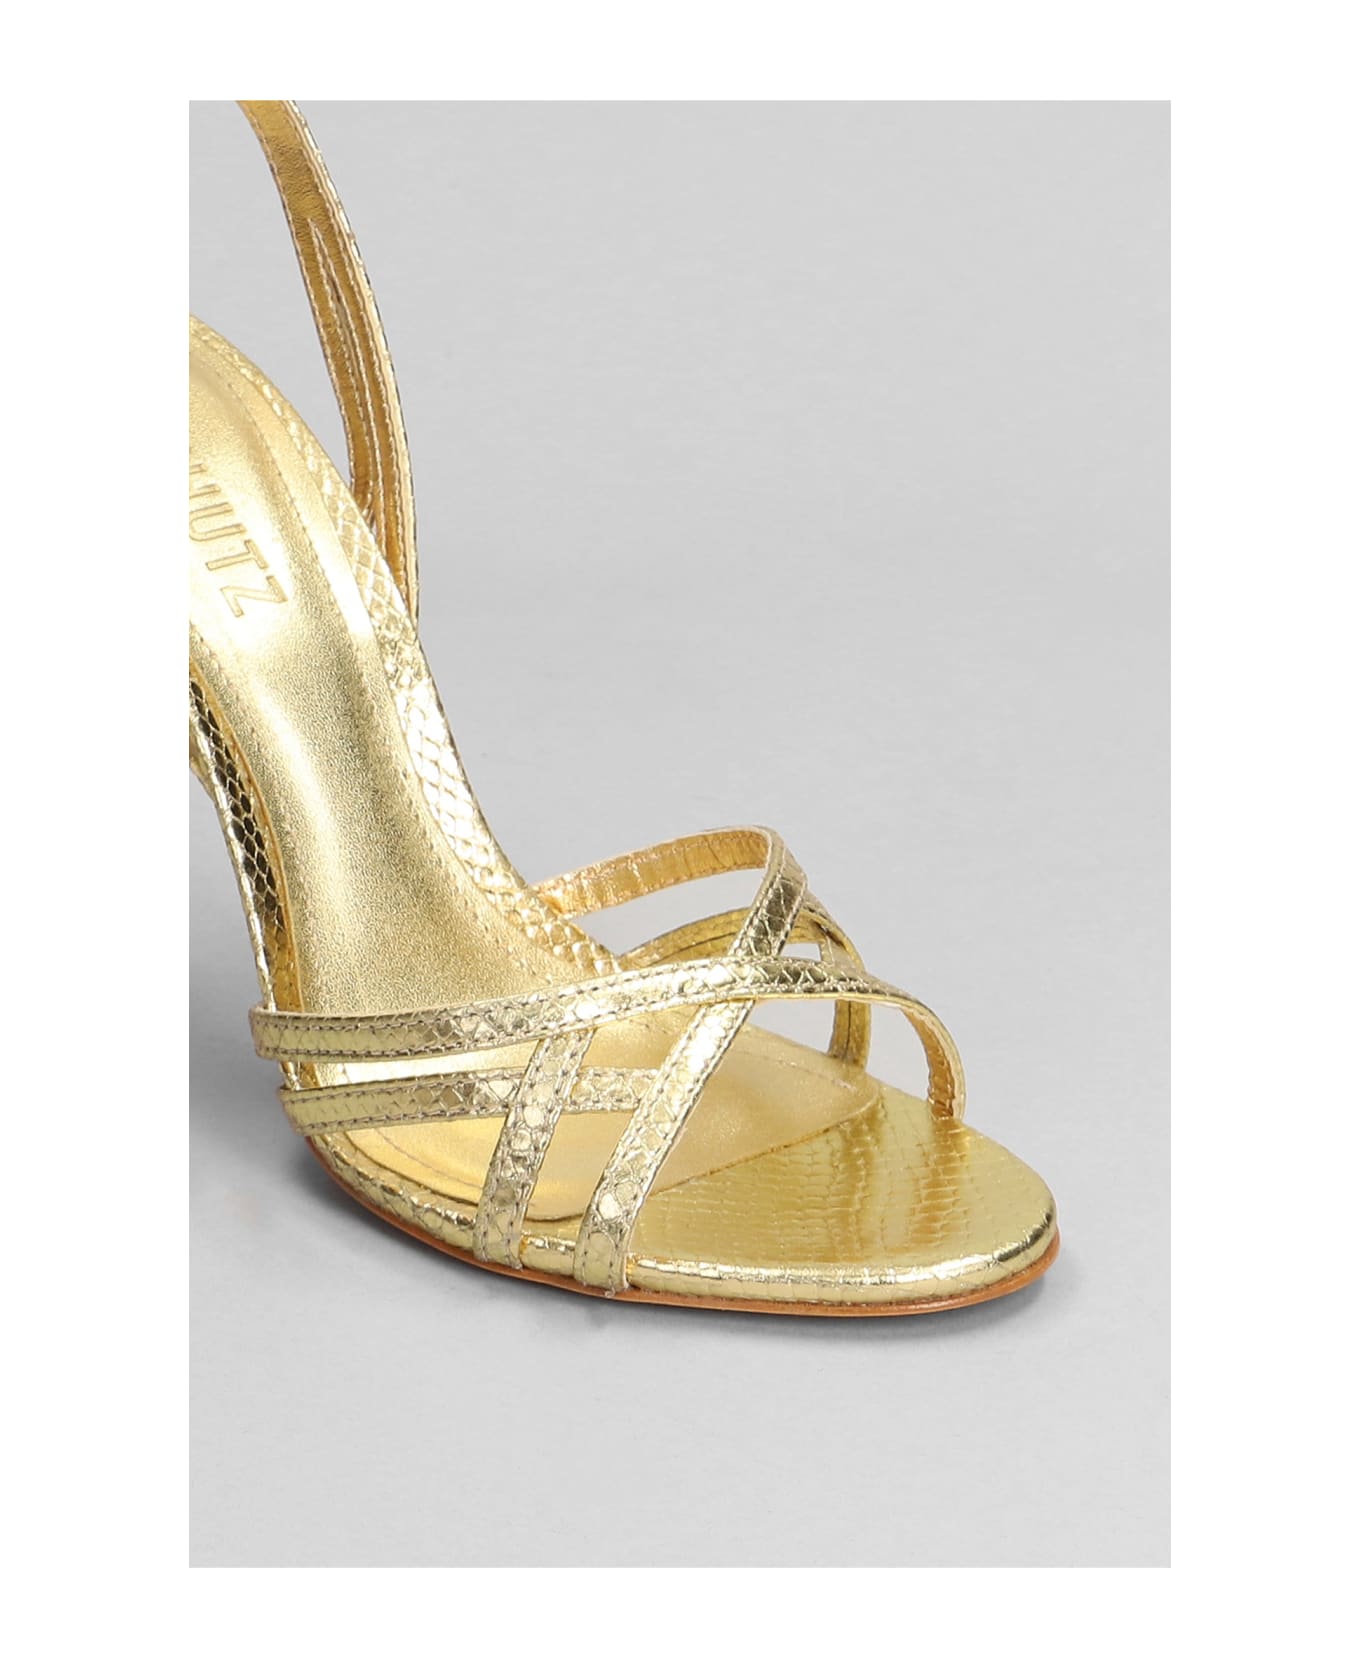 Schutz Sandals In Gold Leather - gold